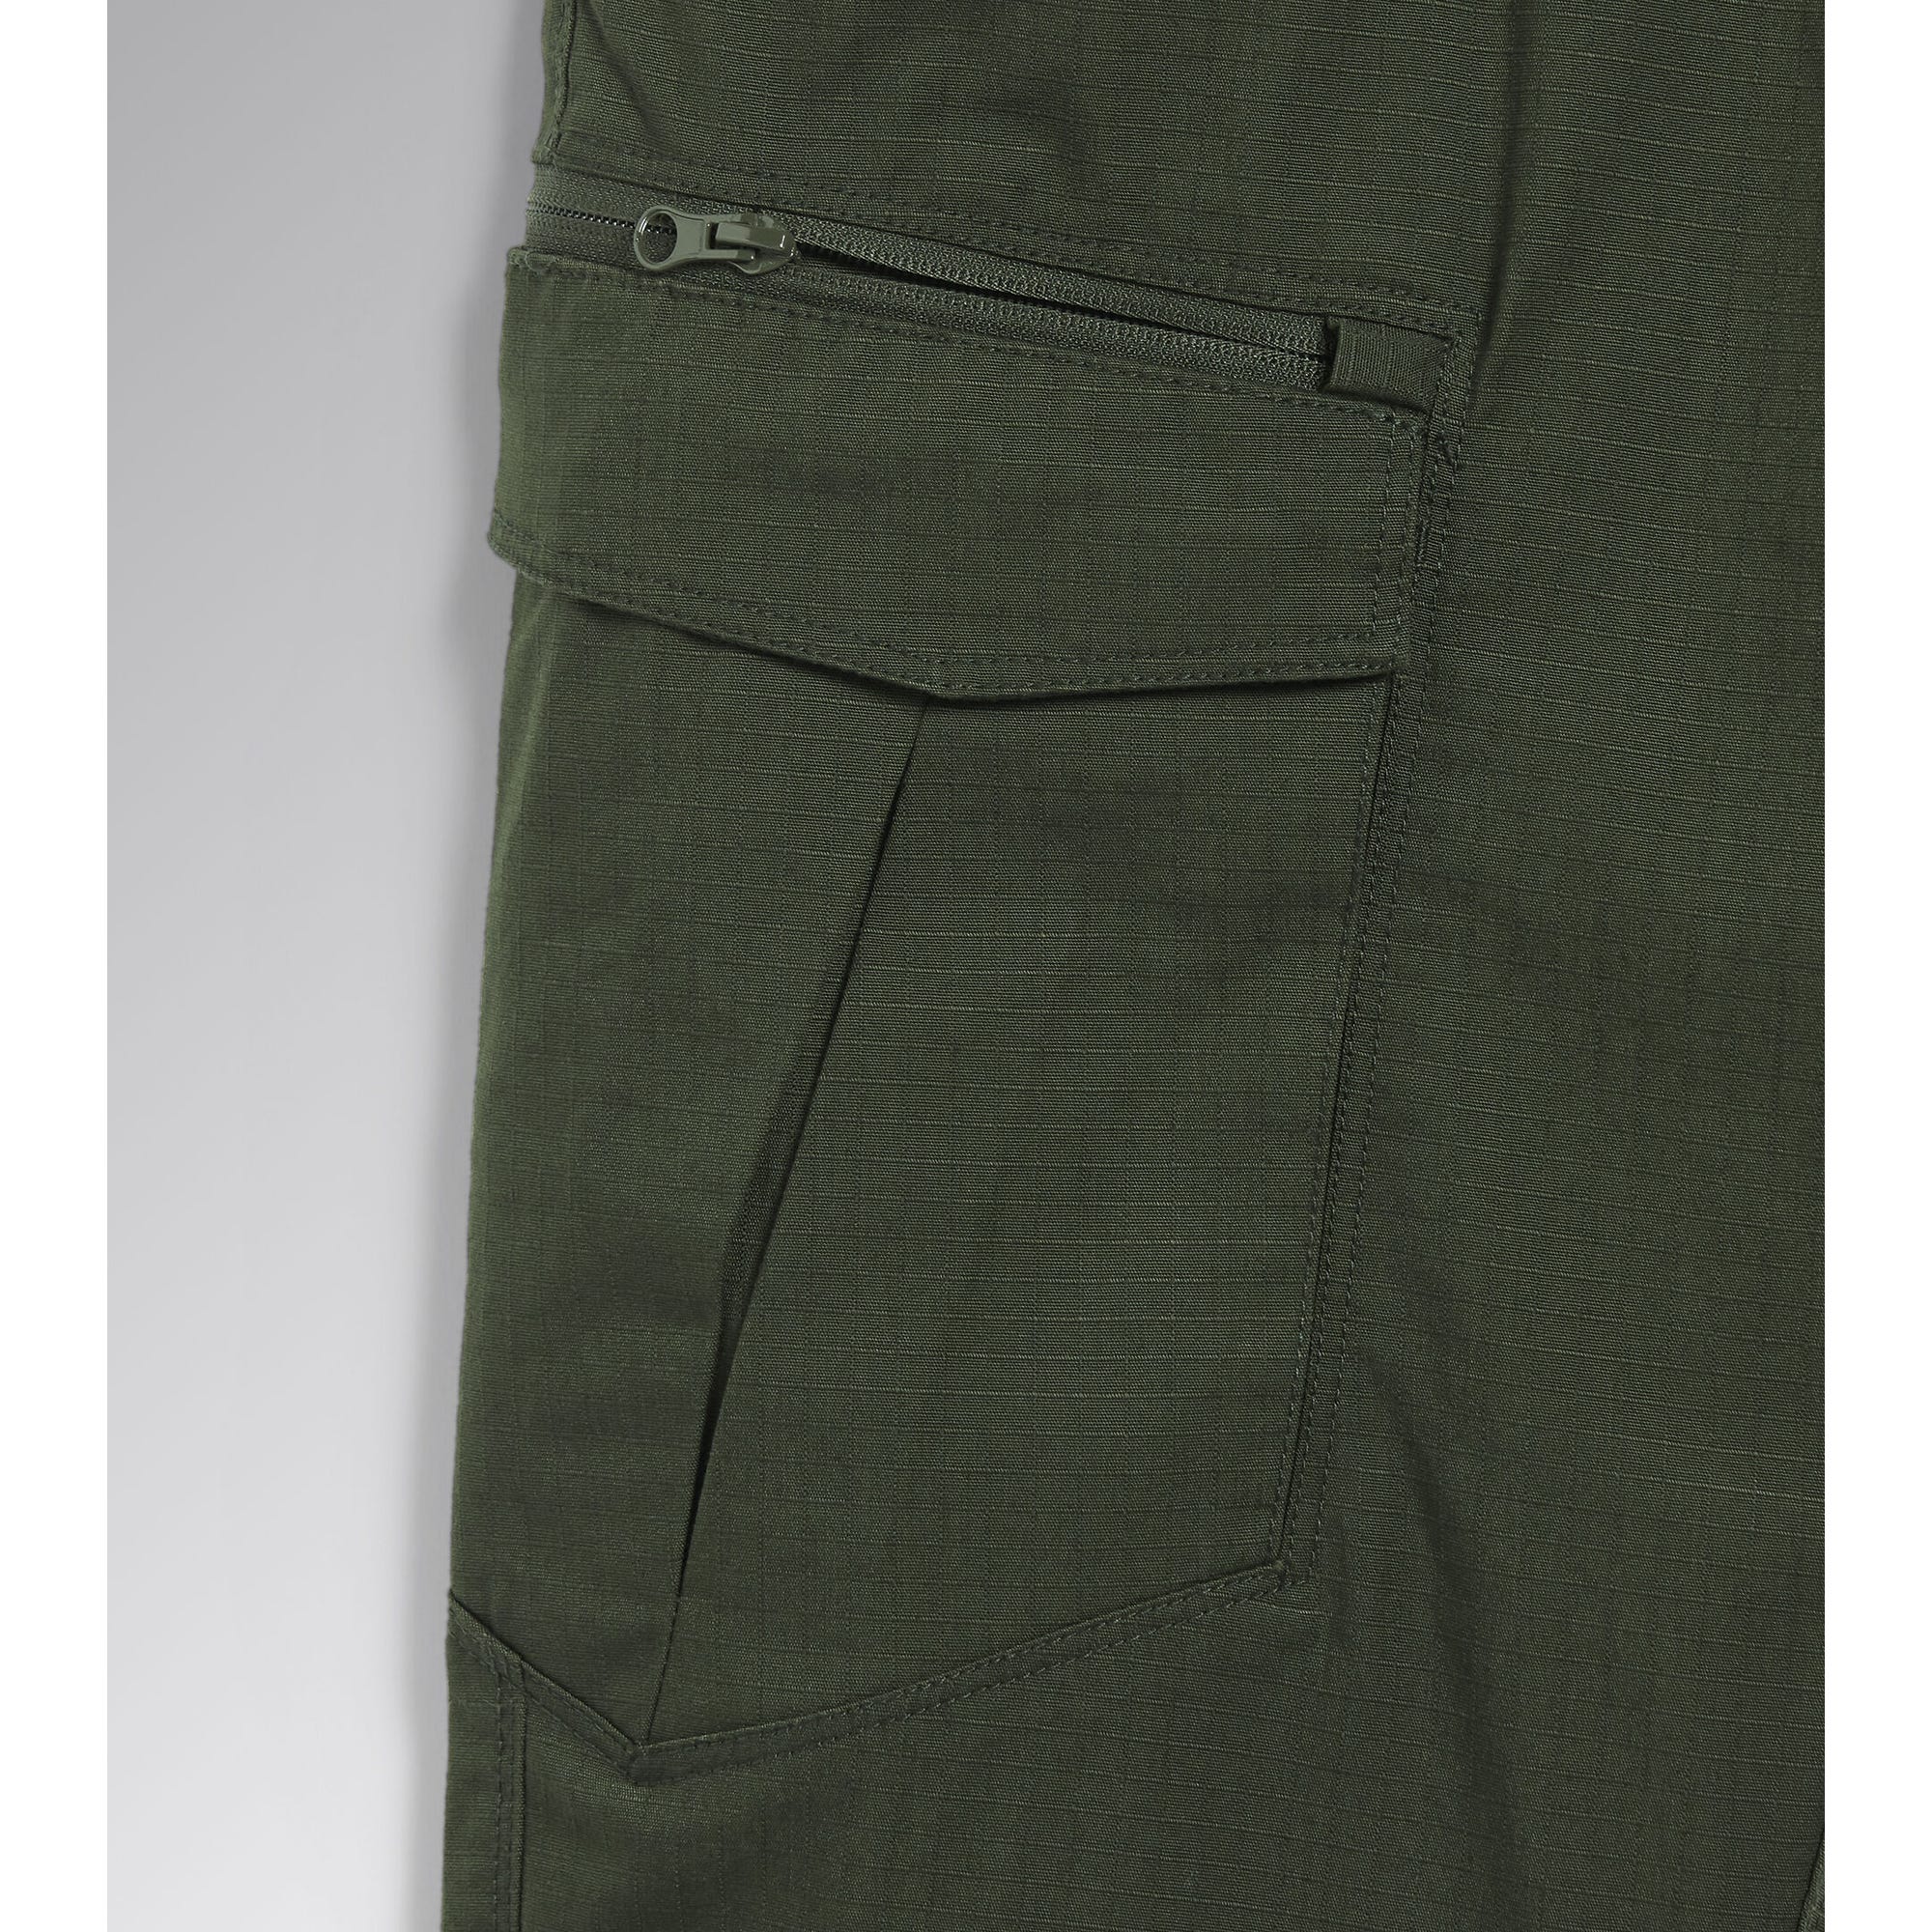 Pantalon de travail DIADORA CROSS CARGO Vert / Forêt M 4